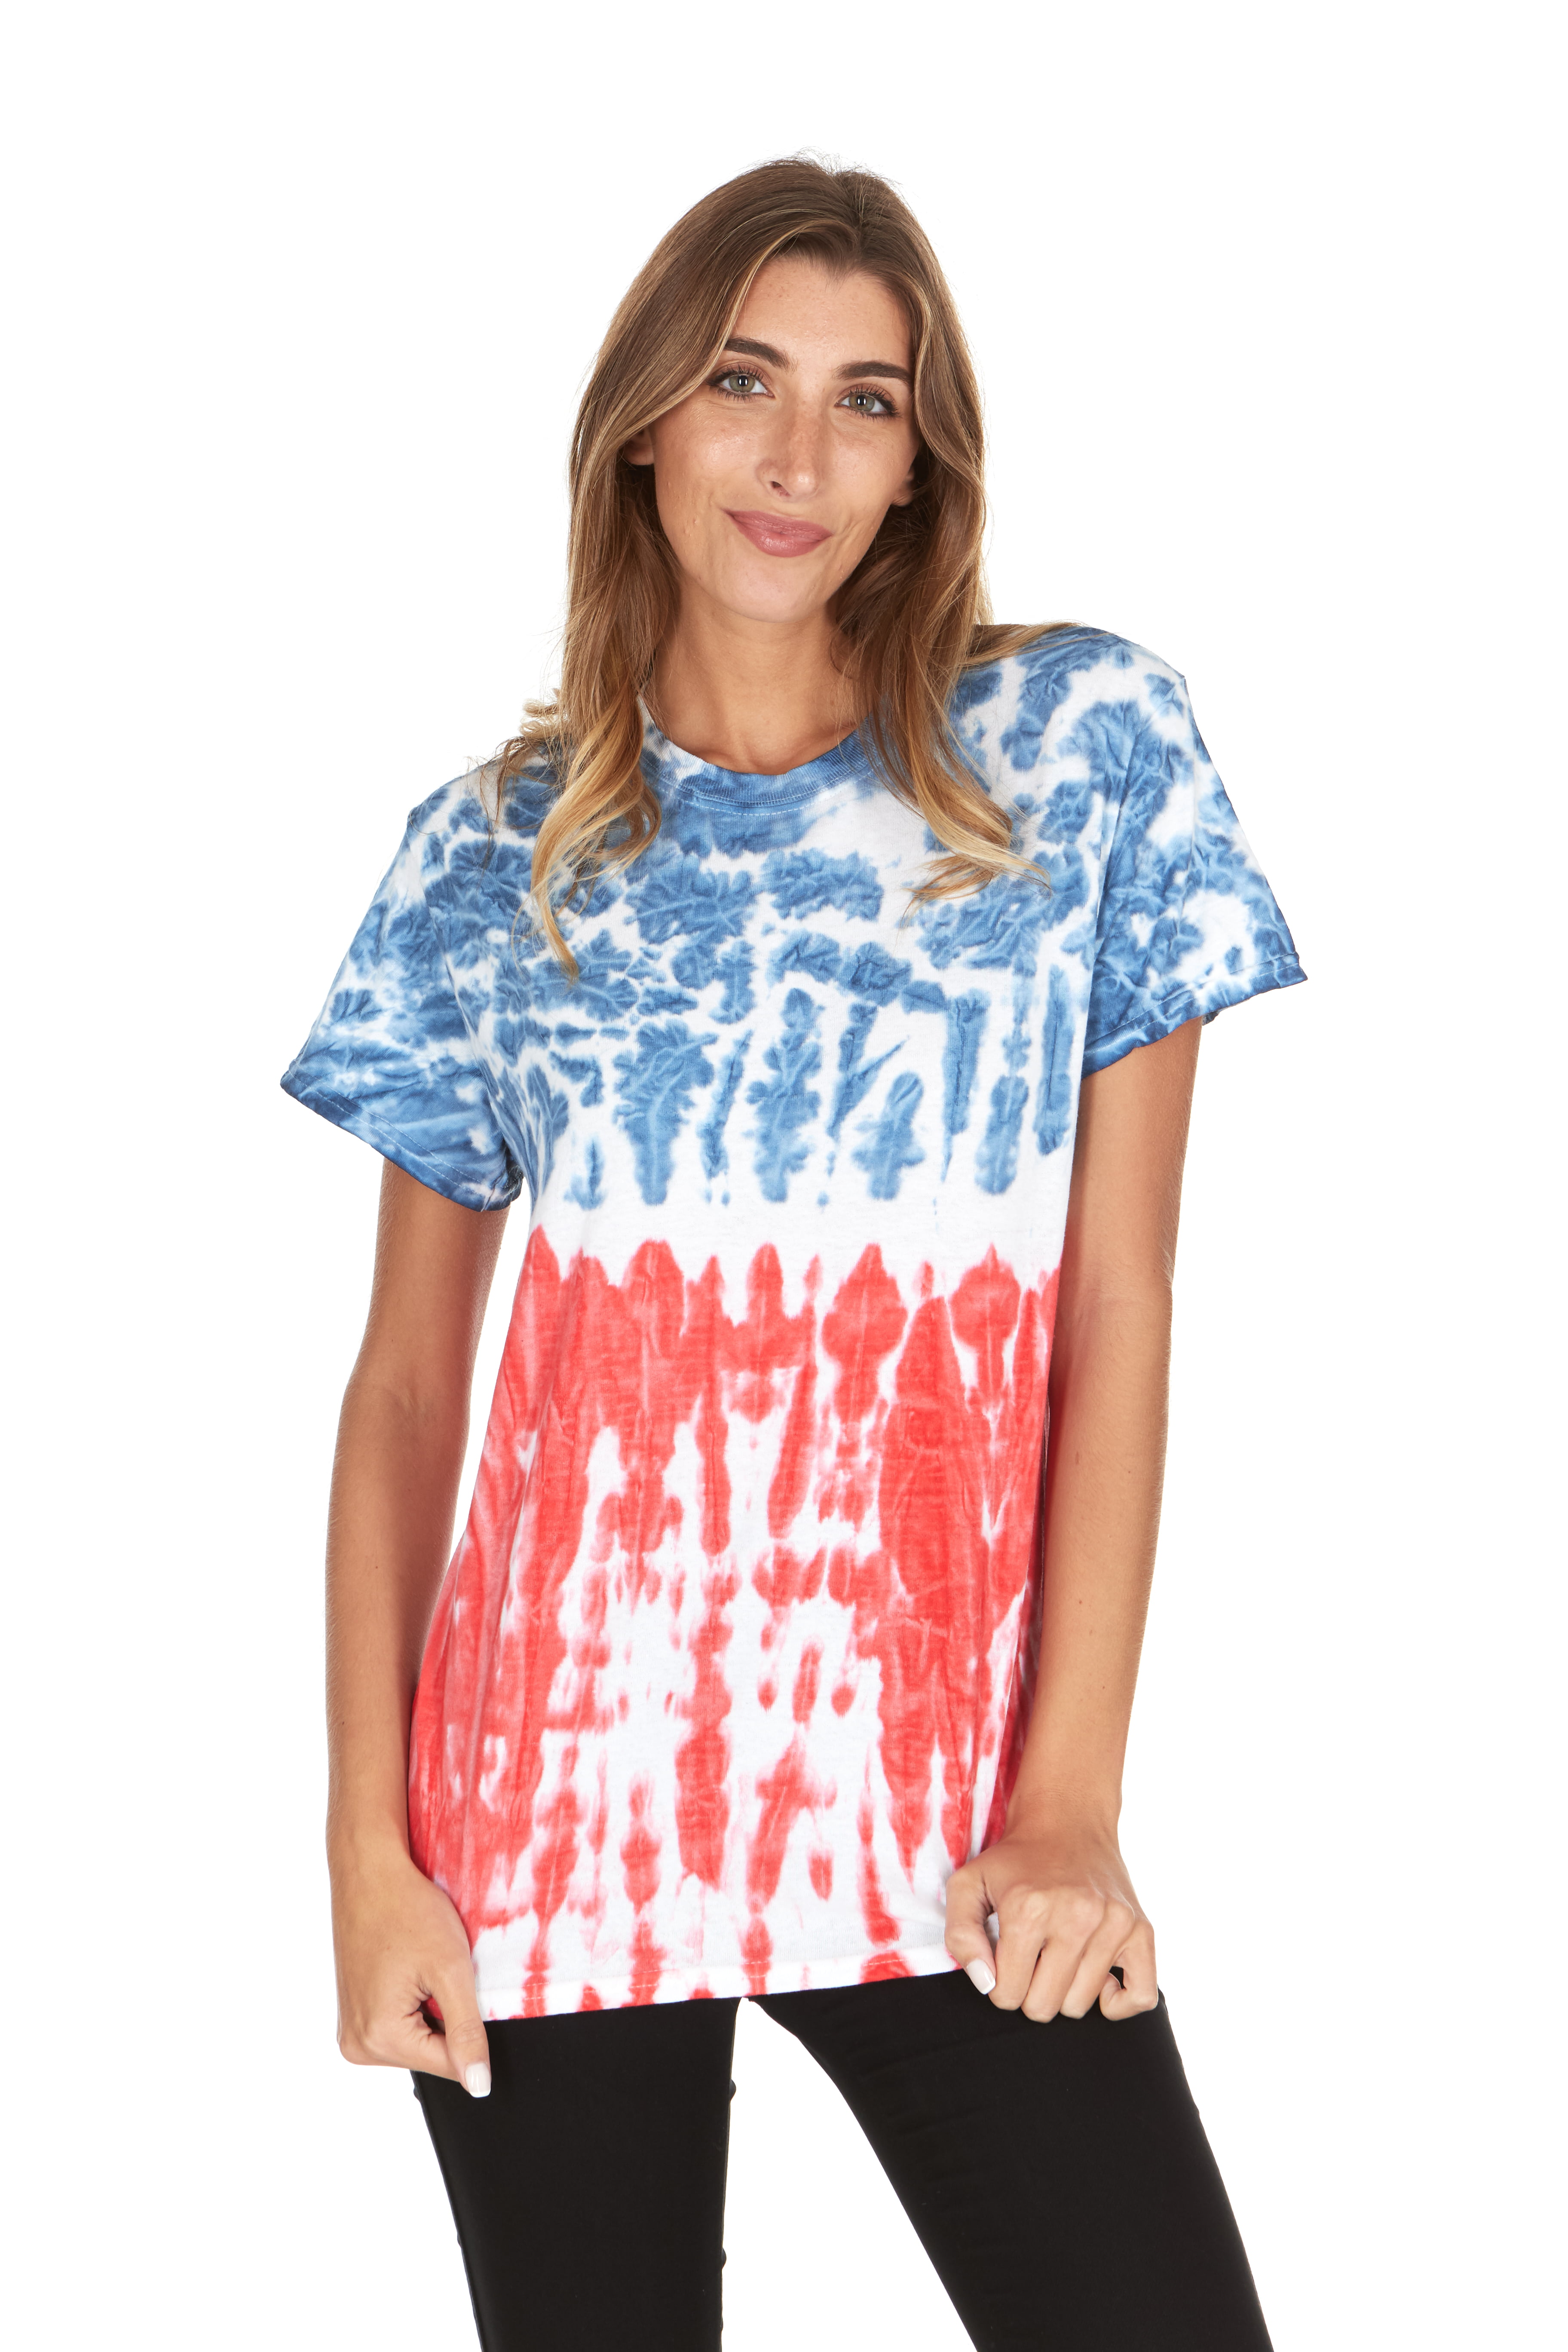 Daresay Tie Dye Style T-Shirts Women - Fun, Multi Color designs Tops ...